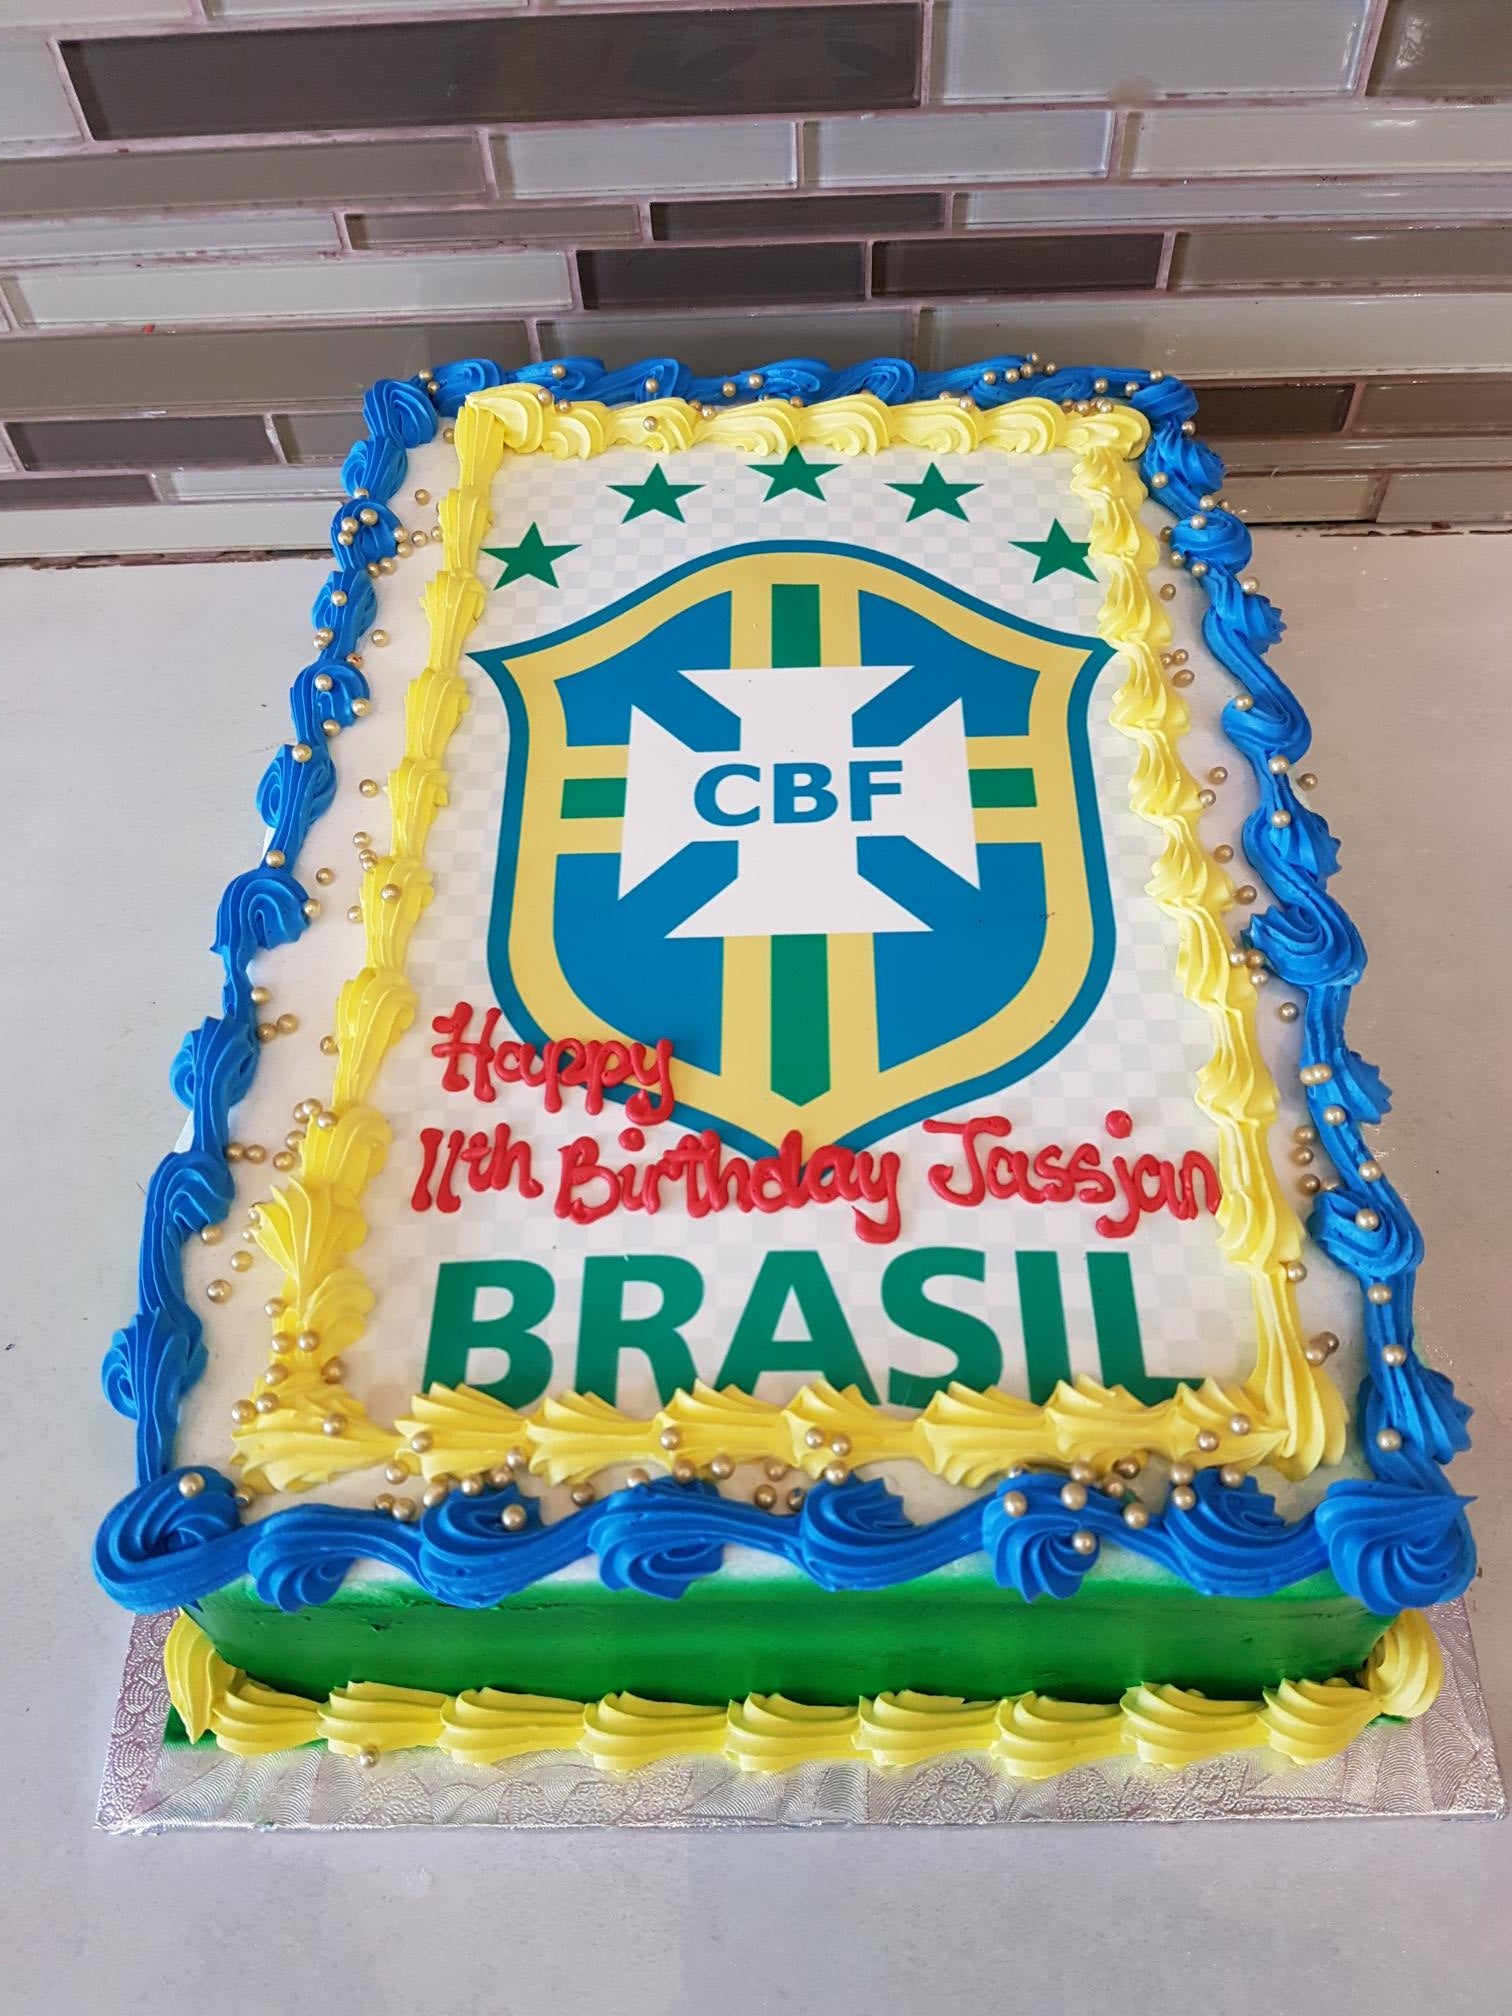 CBF Brazil Photo Cake - Rashmi's Bakery